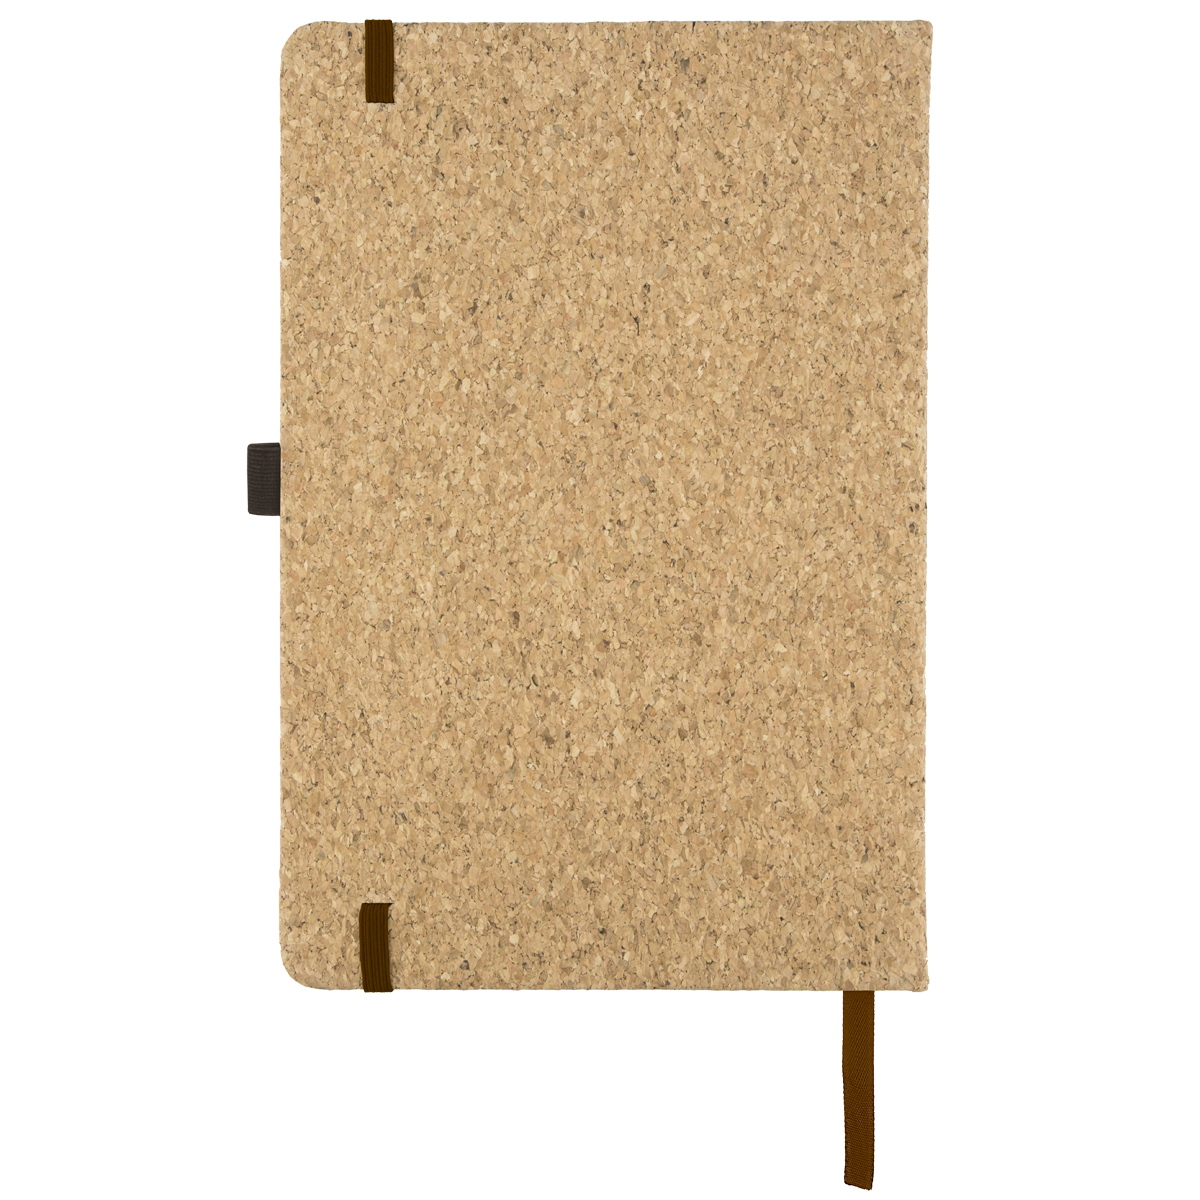 Notebook back - image